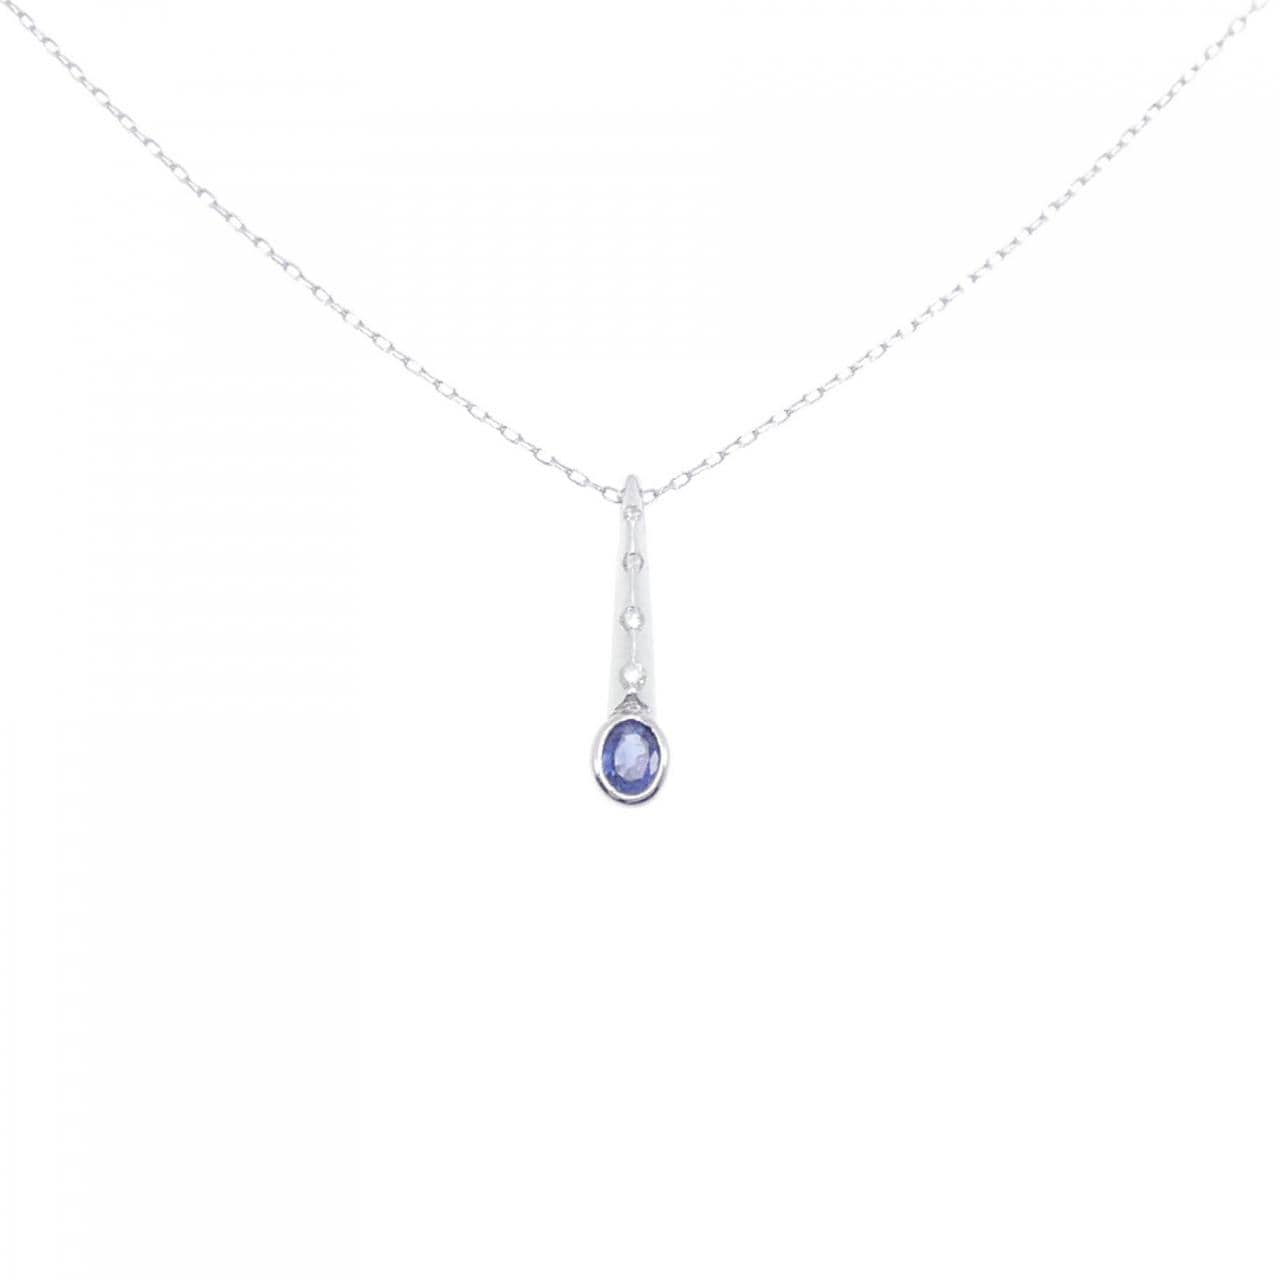 K18WG sapphire necklace 0.45CT